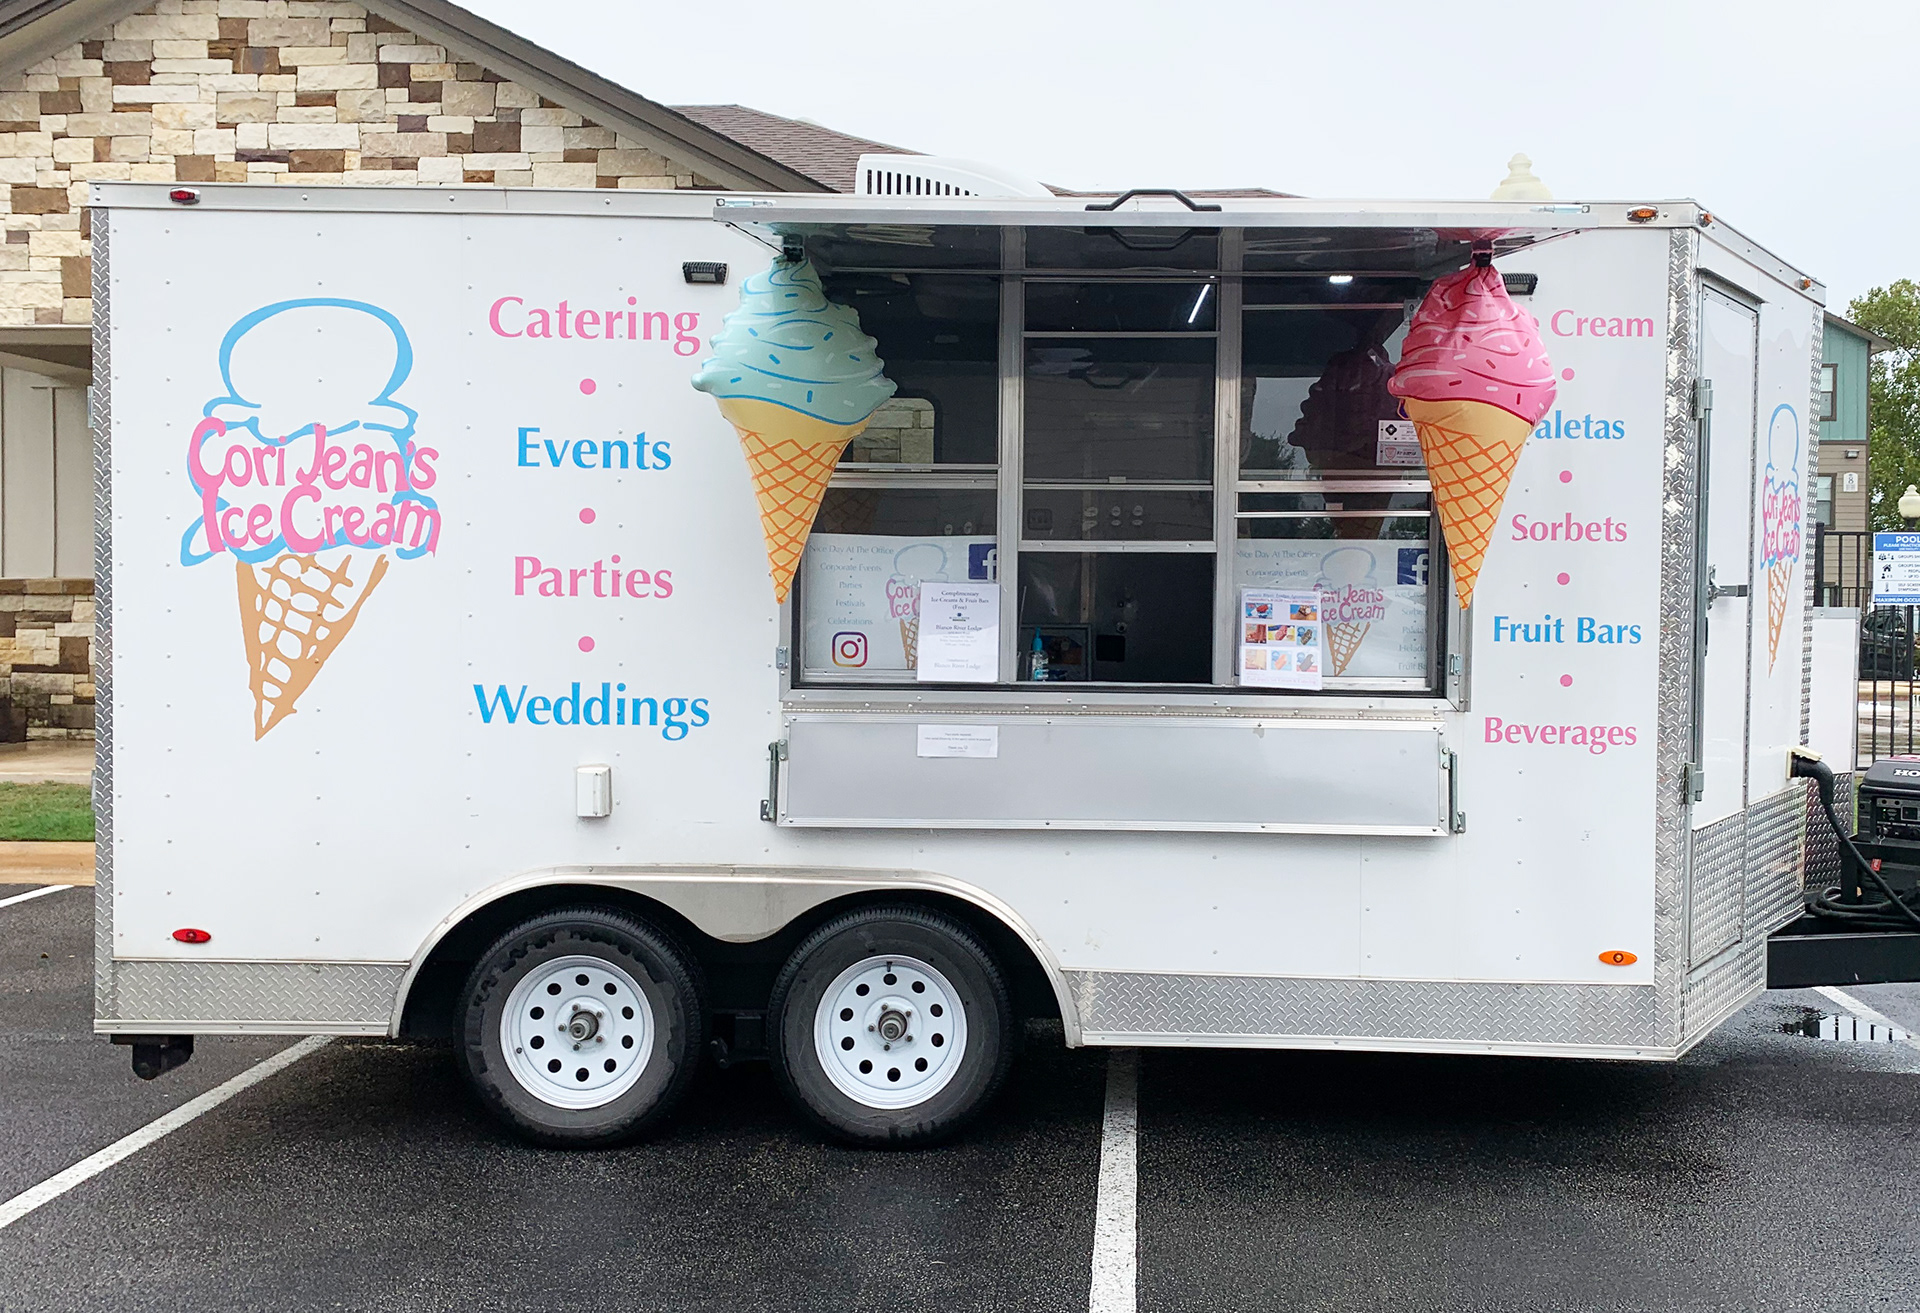 Cori Jean Ice Cream and Catering - EVENT SERVICES